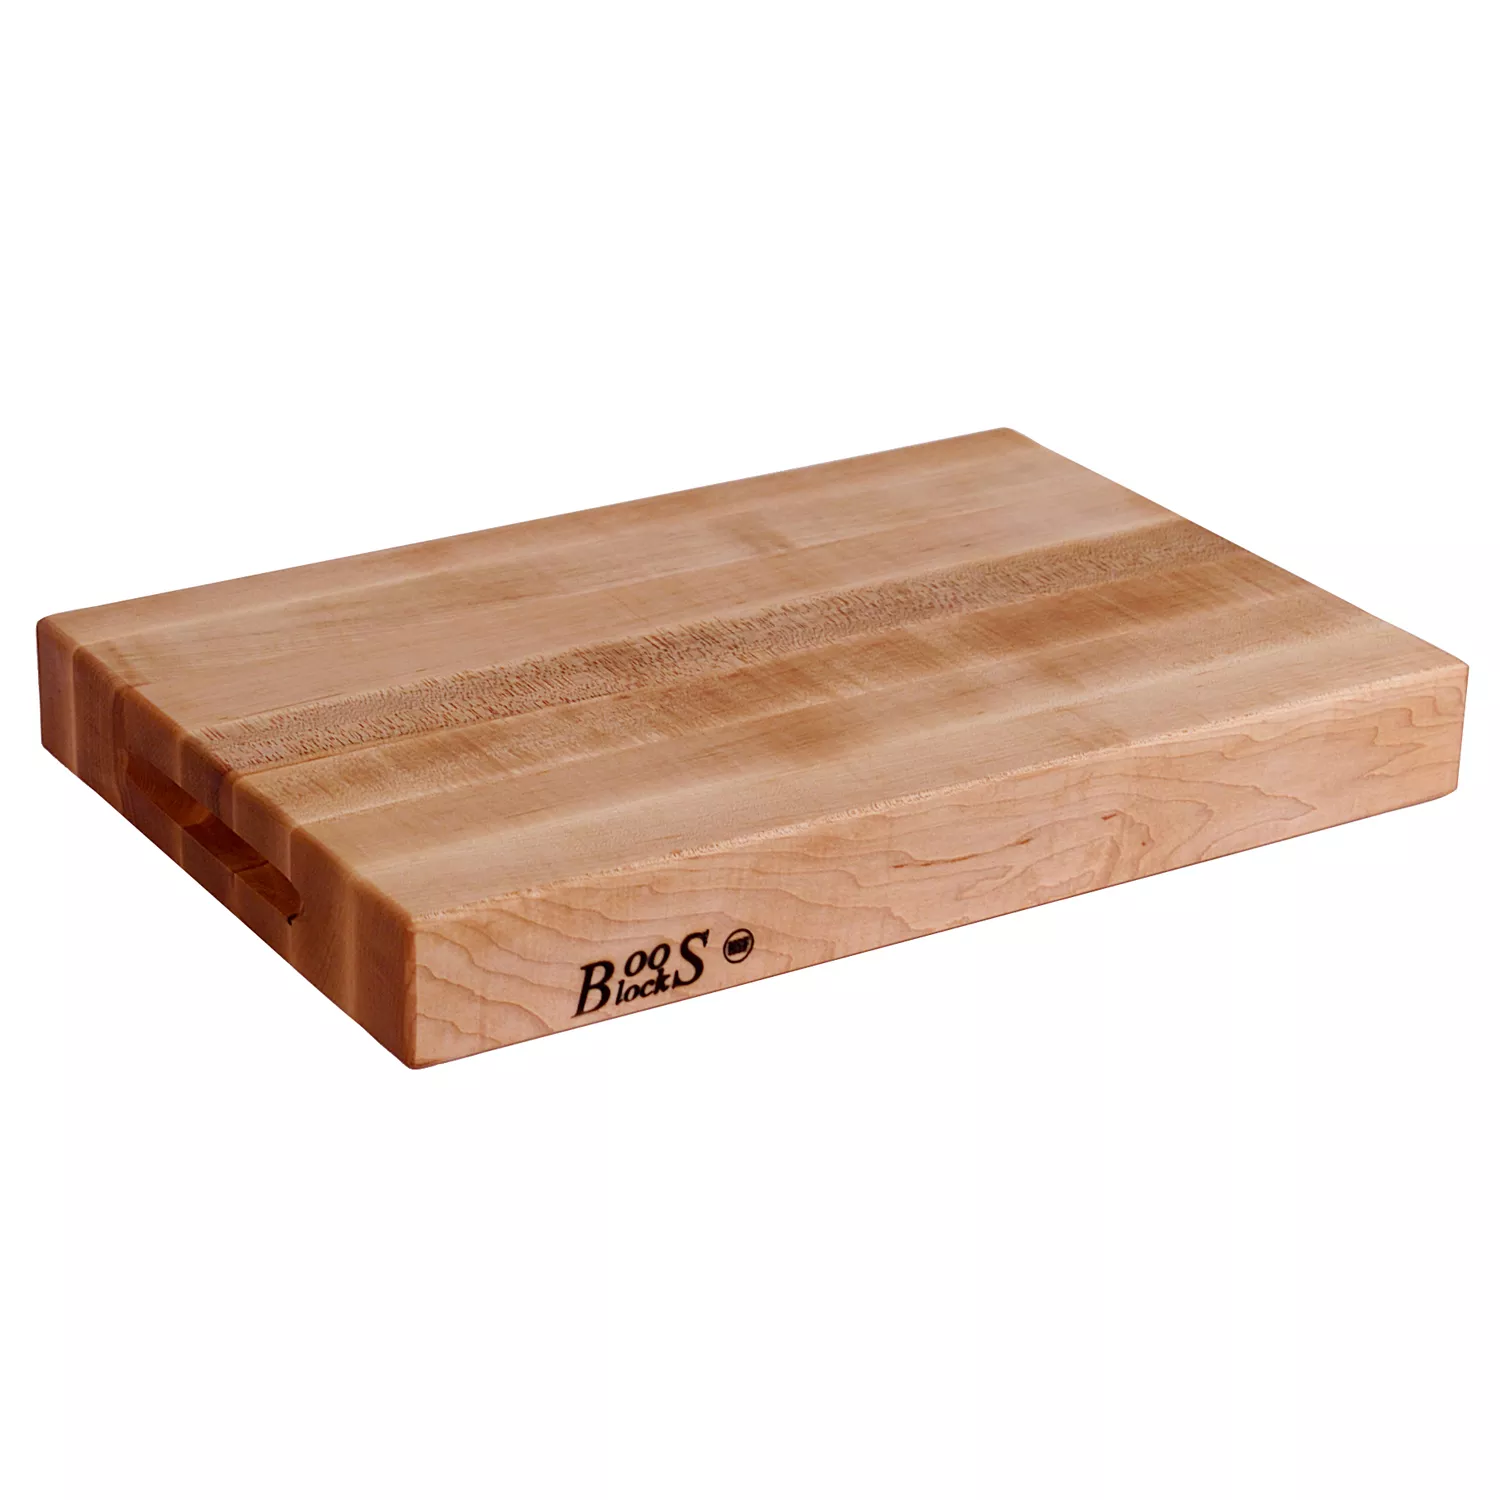 John Boos Maple Edge Grain Cutting Board with Insert,2.25" Thick